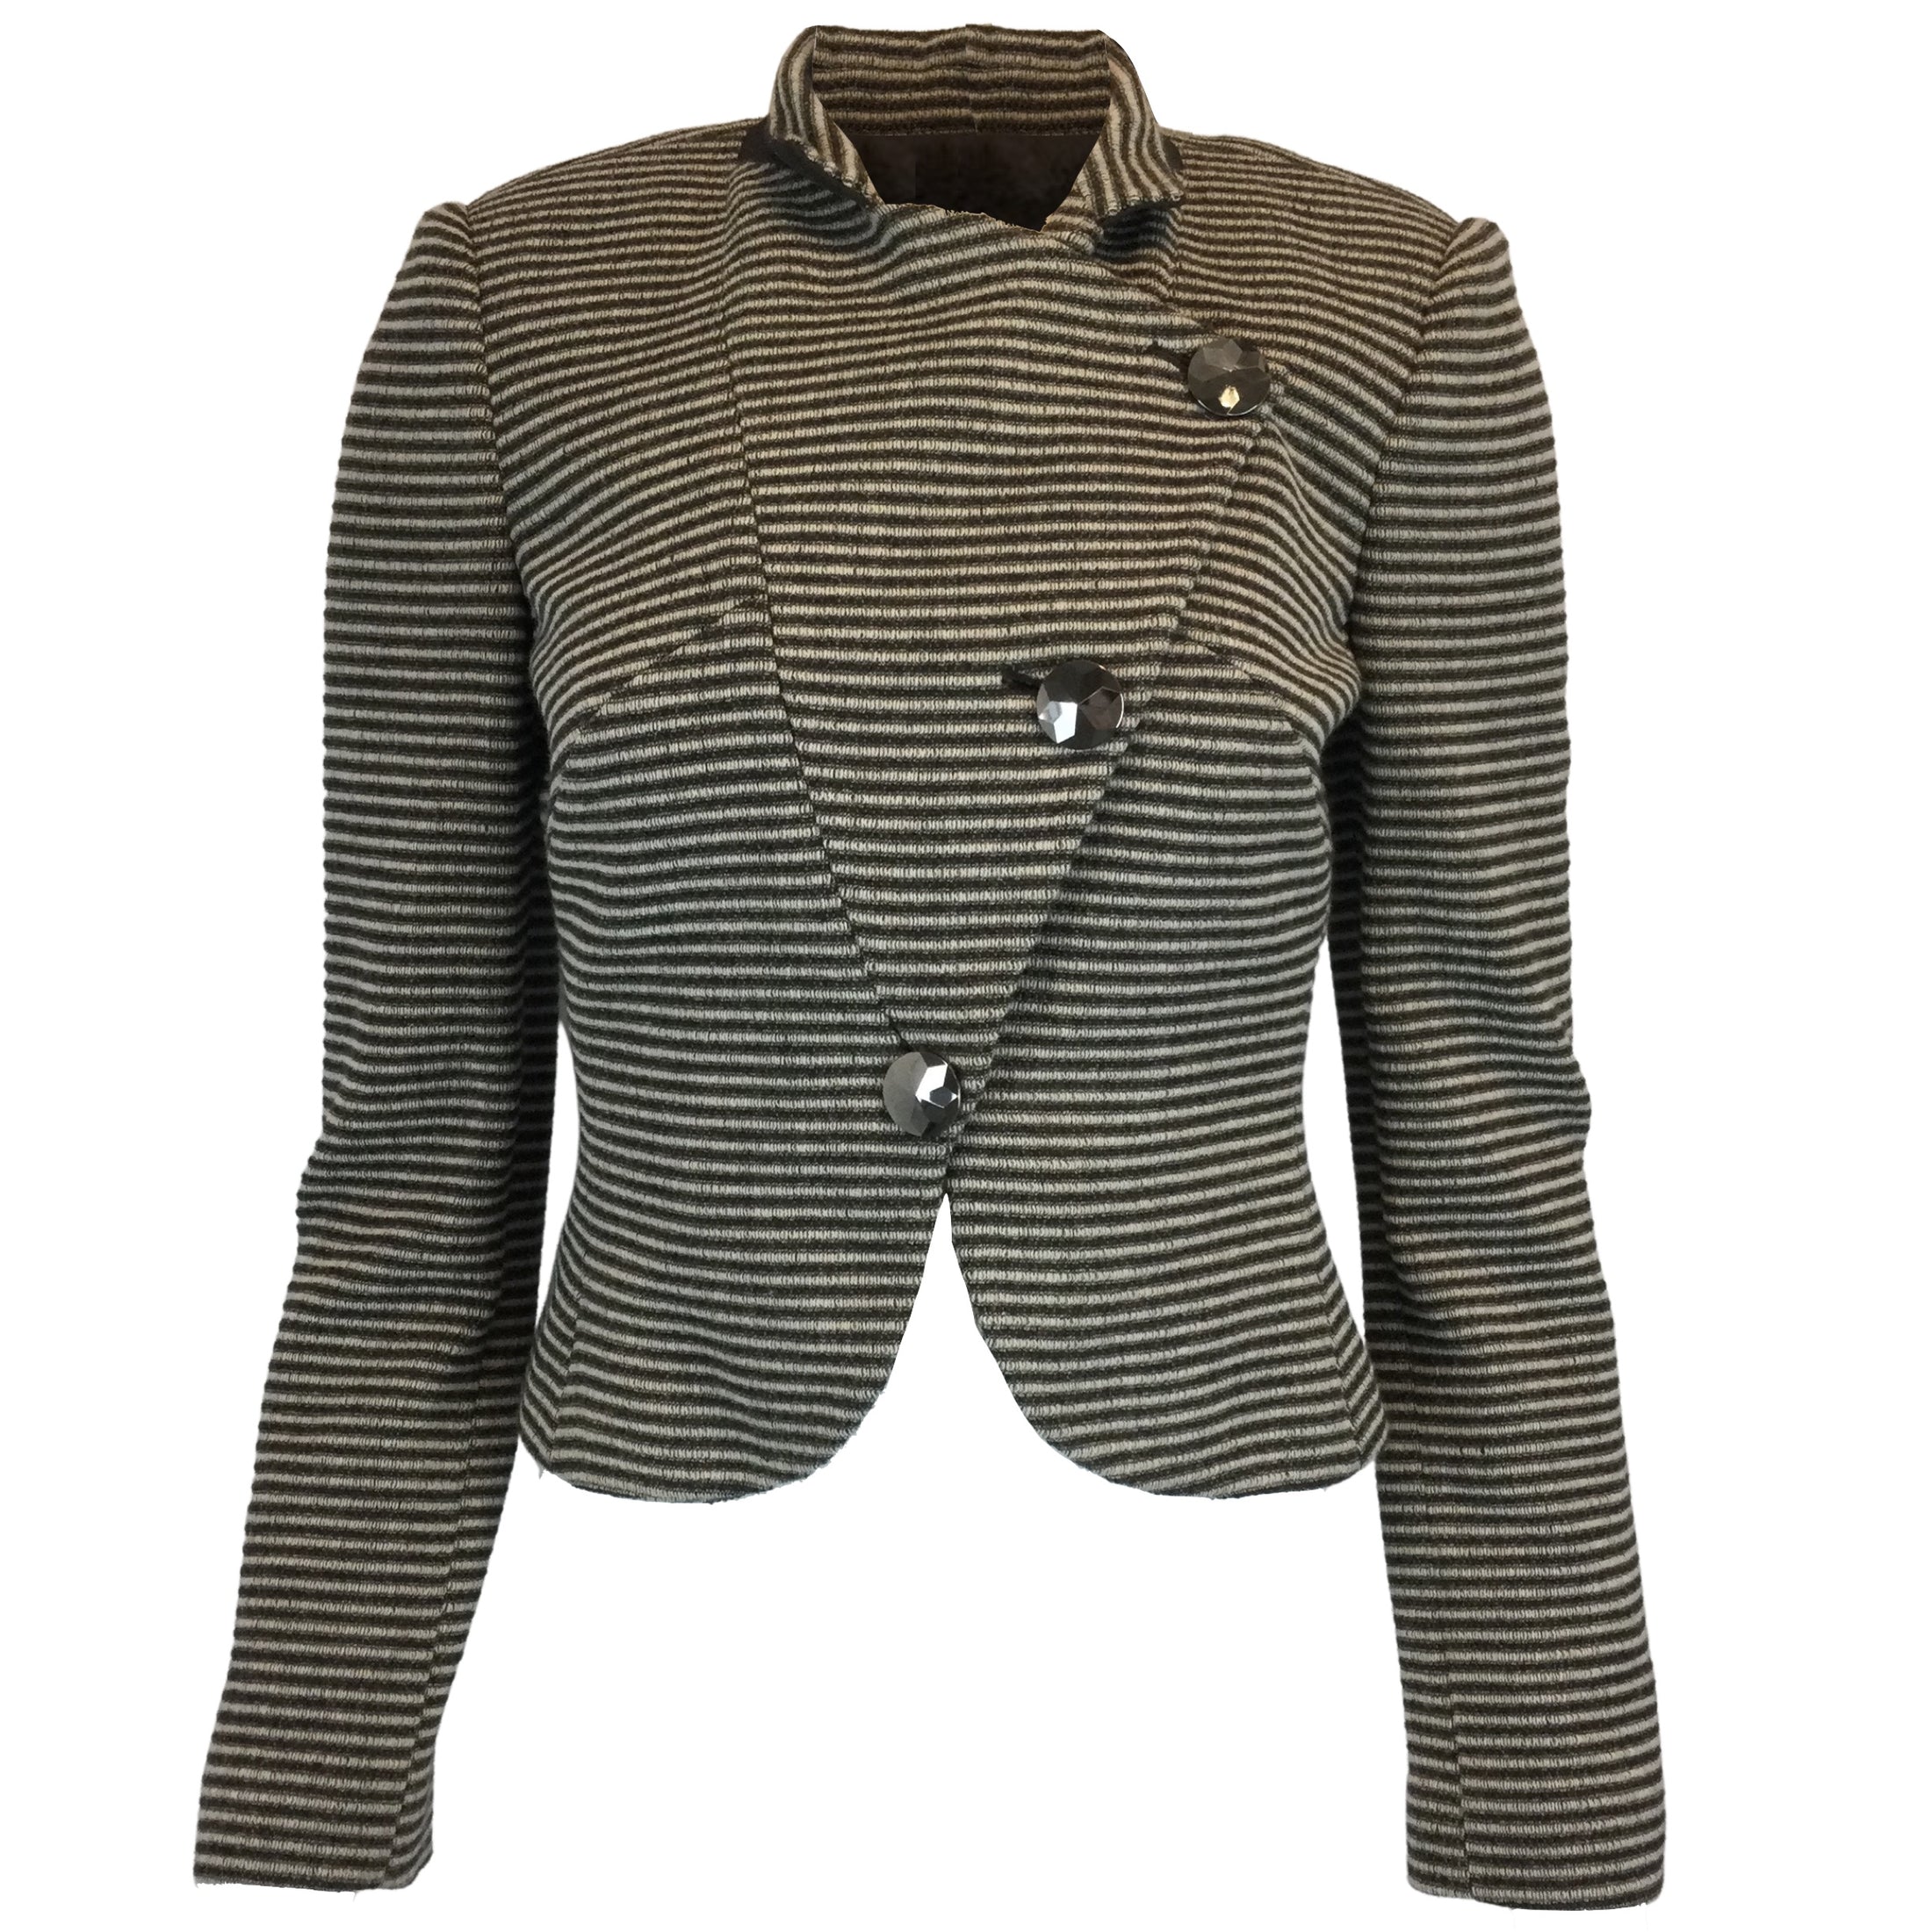 Giorgio Armani Striped Wool & Cashmere Knit Jacket